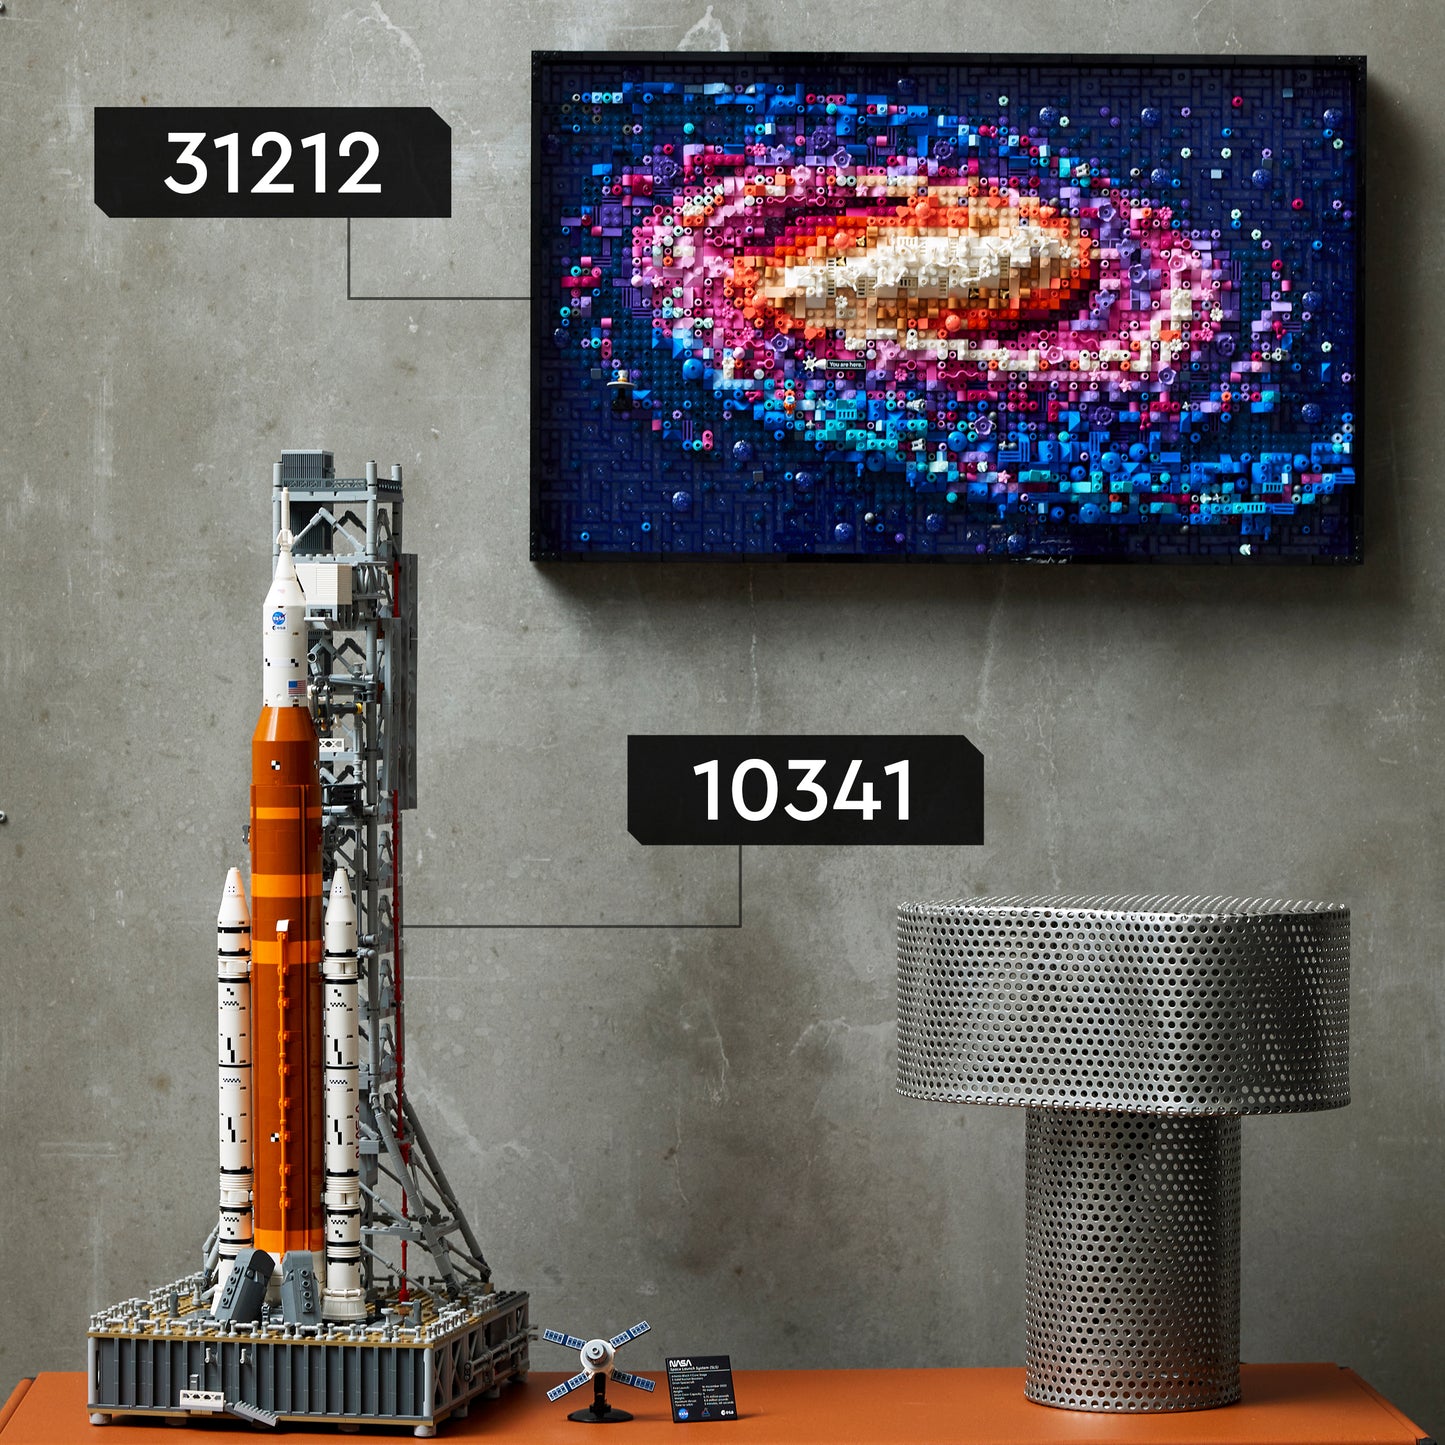 LEGO NASA Artemis ruimtelanceersysteem raket met platform 10341 Icons